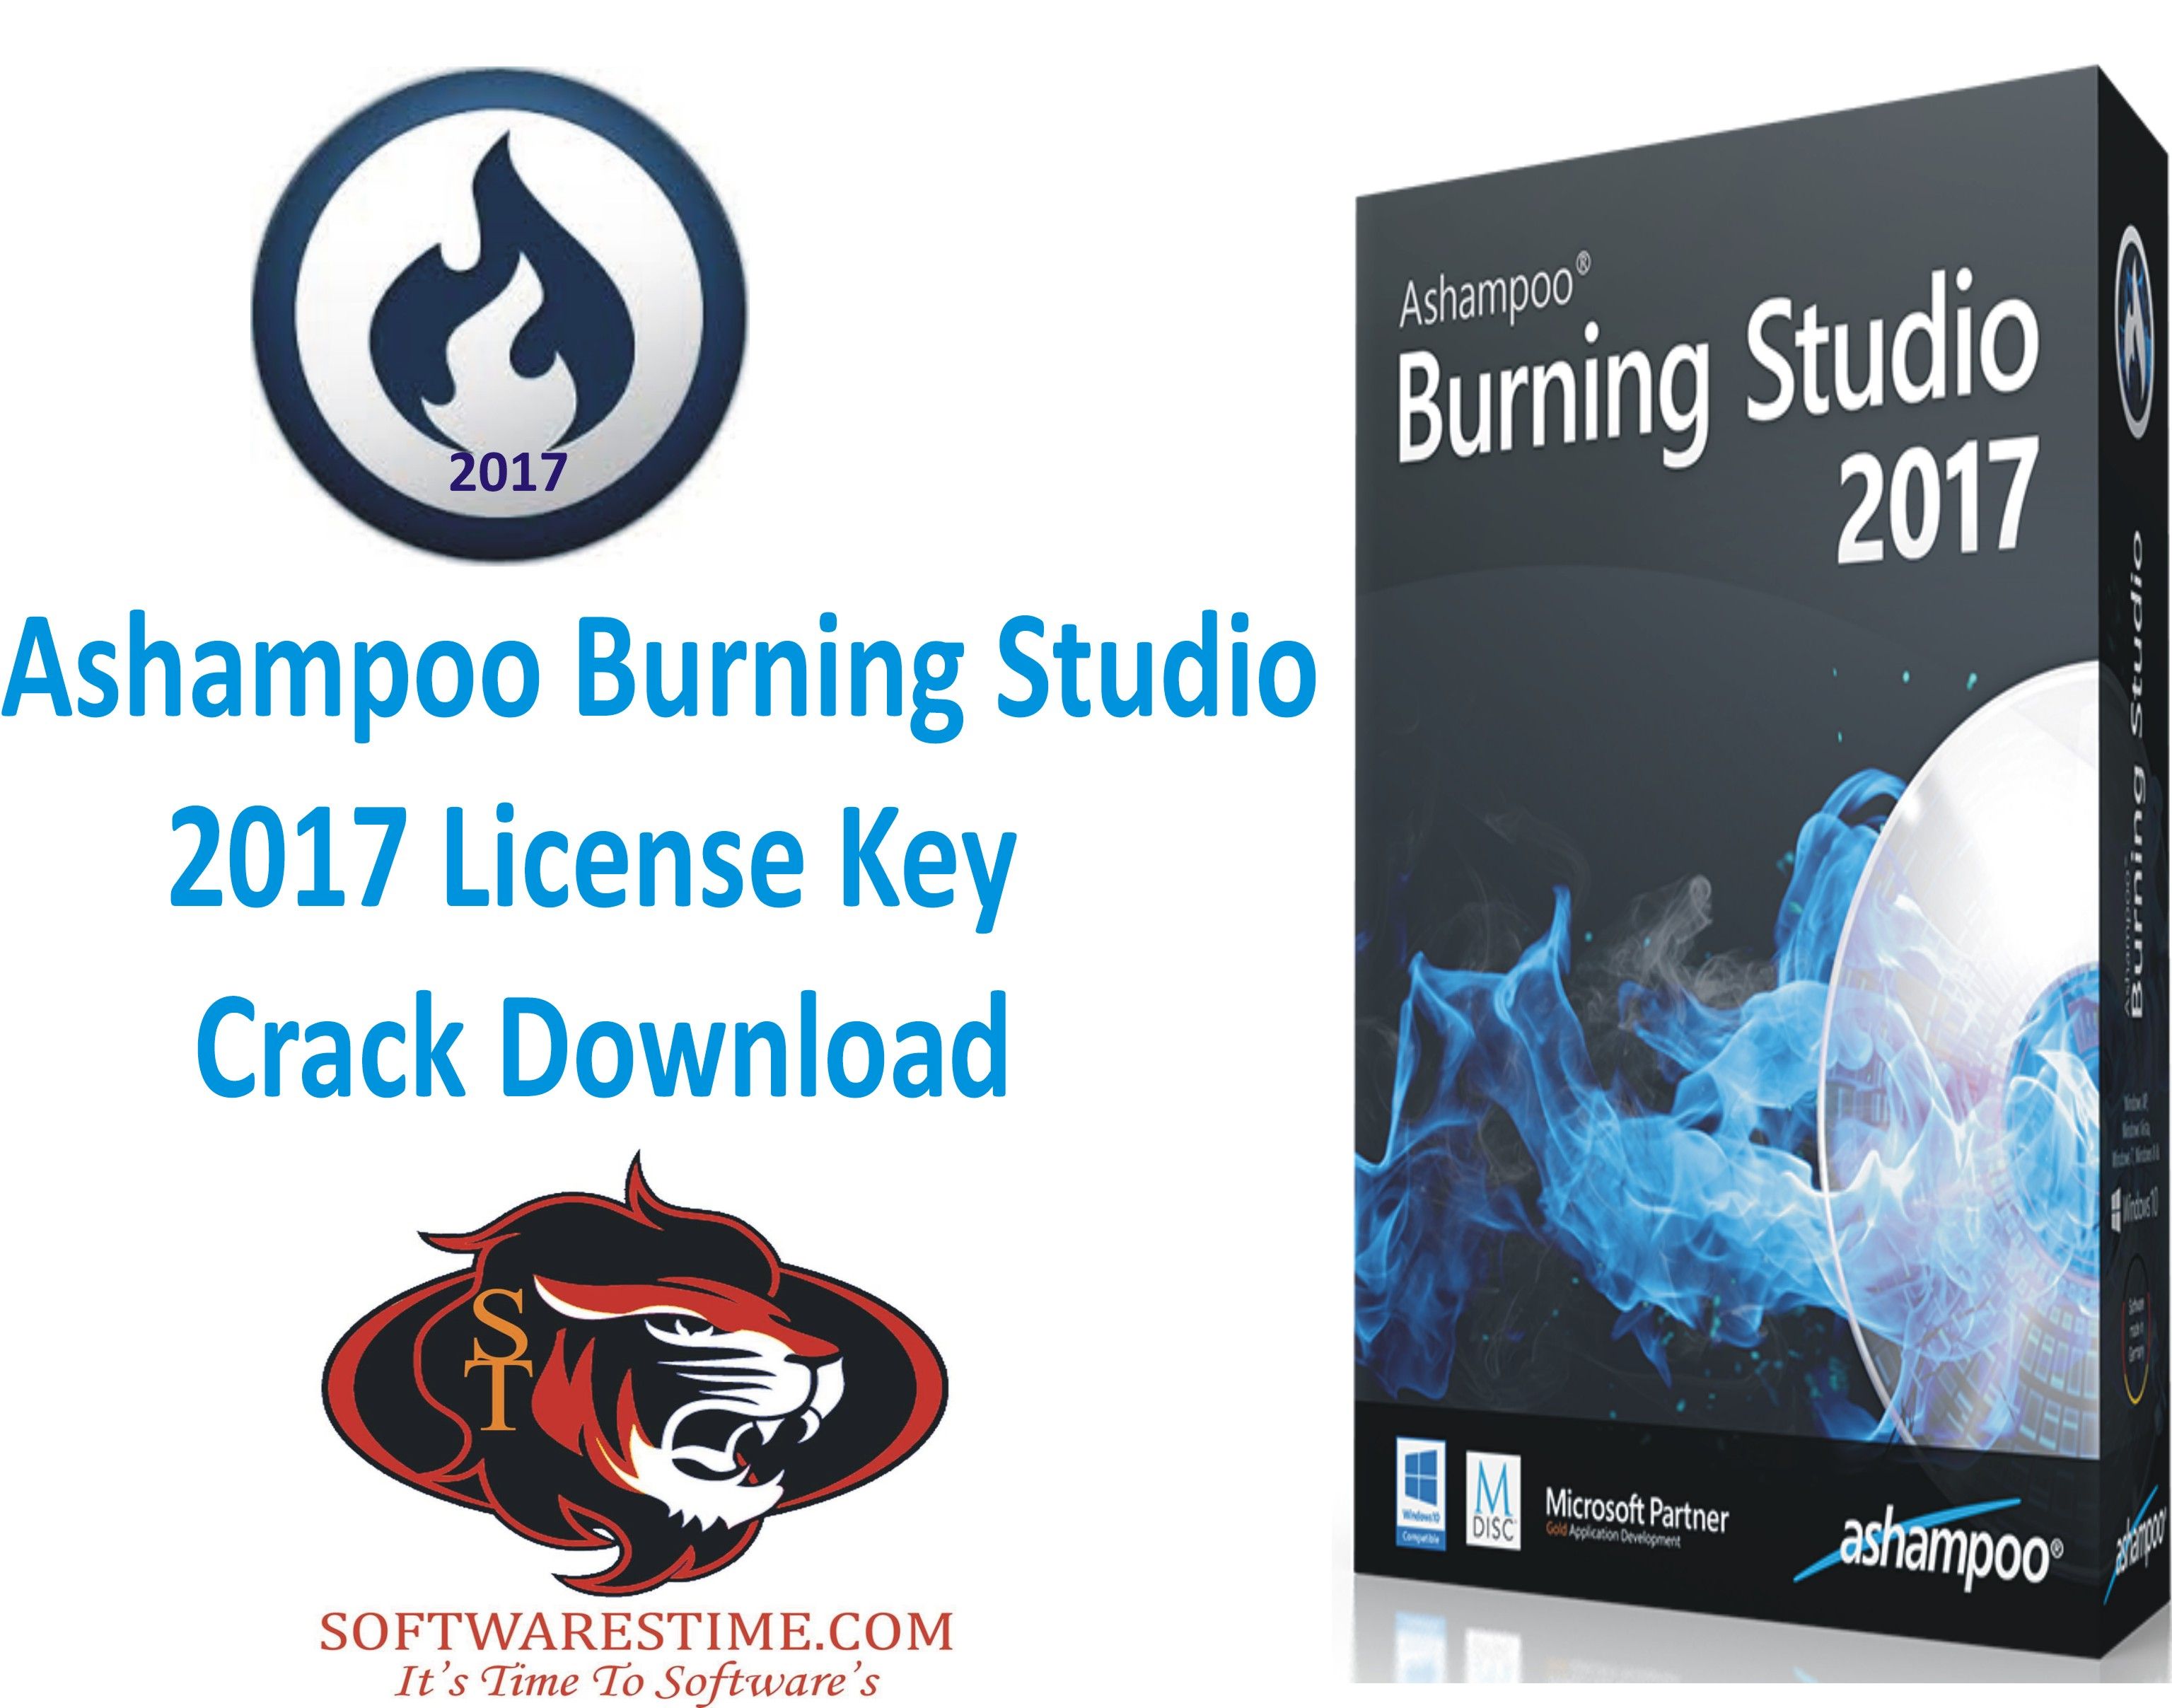 ashampoo burning studio 20 review